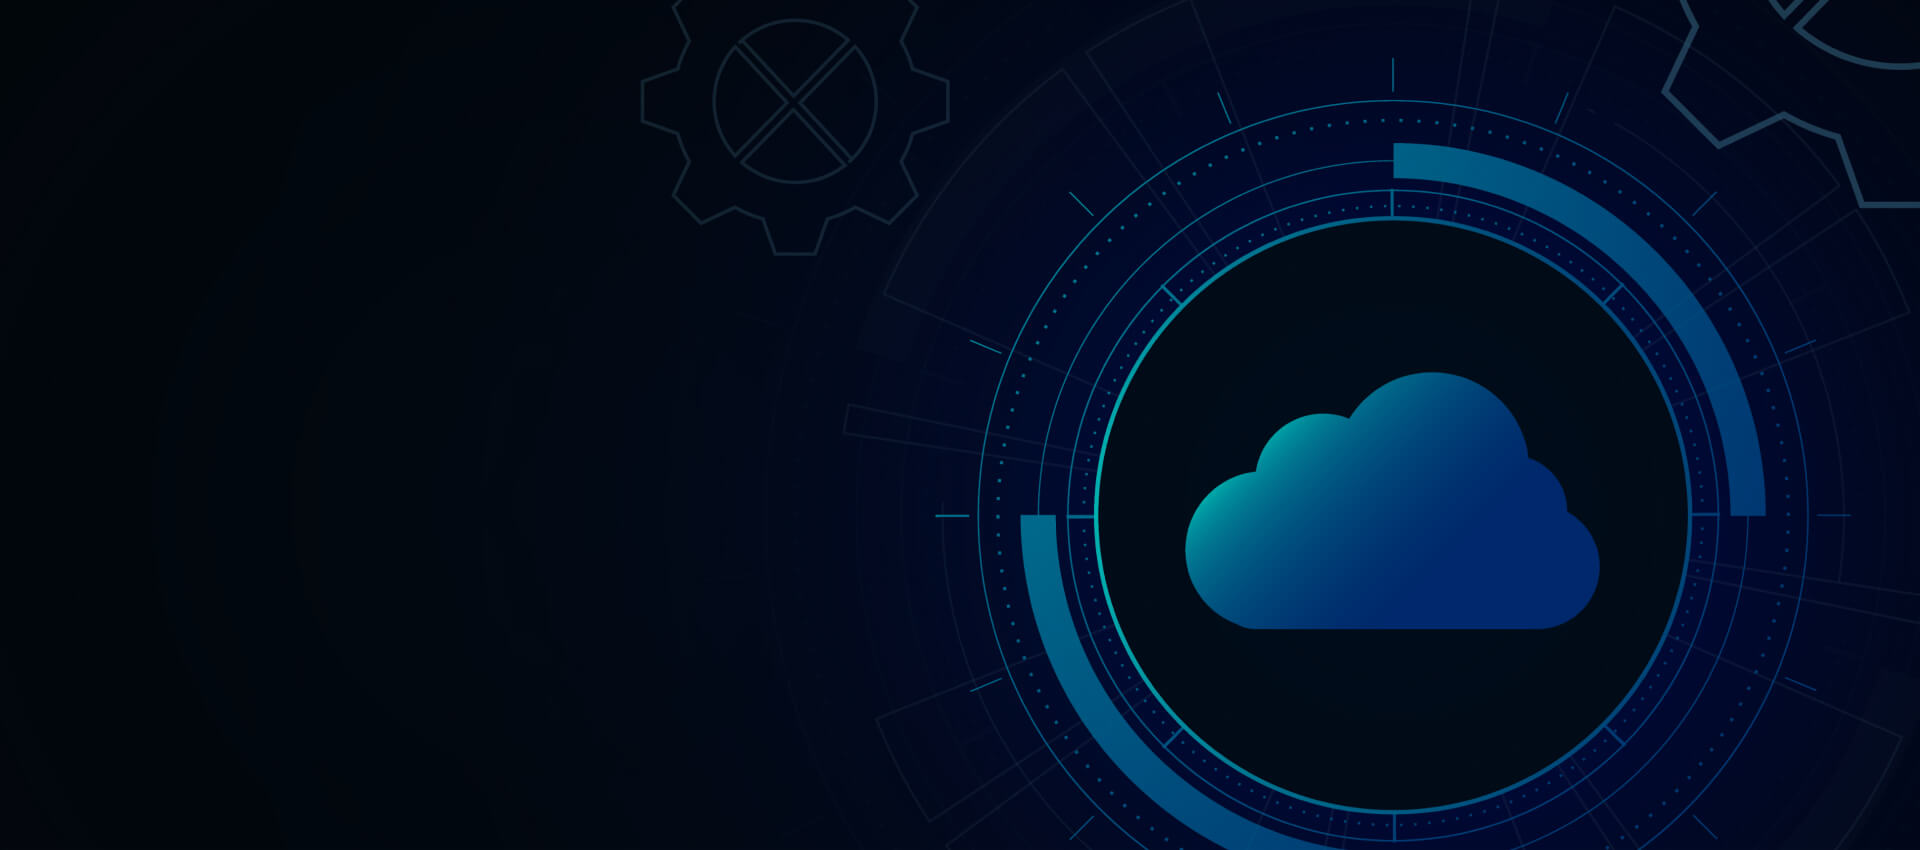 cloud service provider partnerships illustration